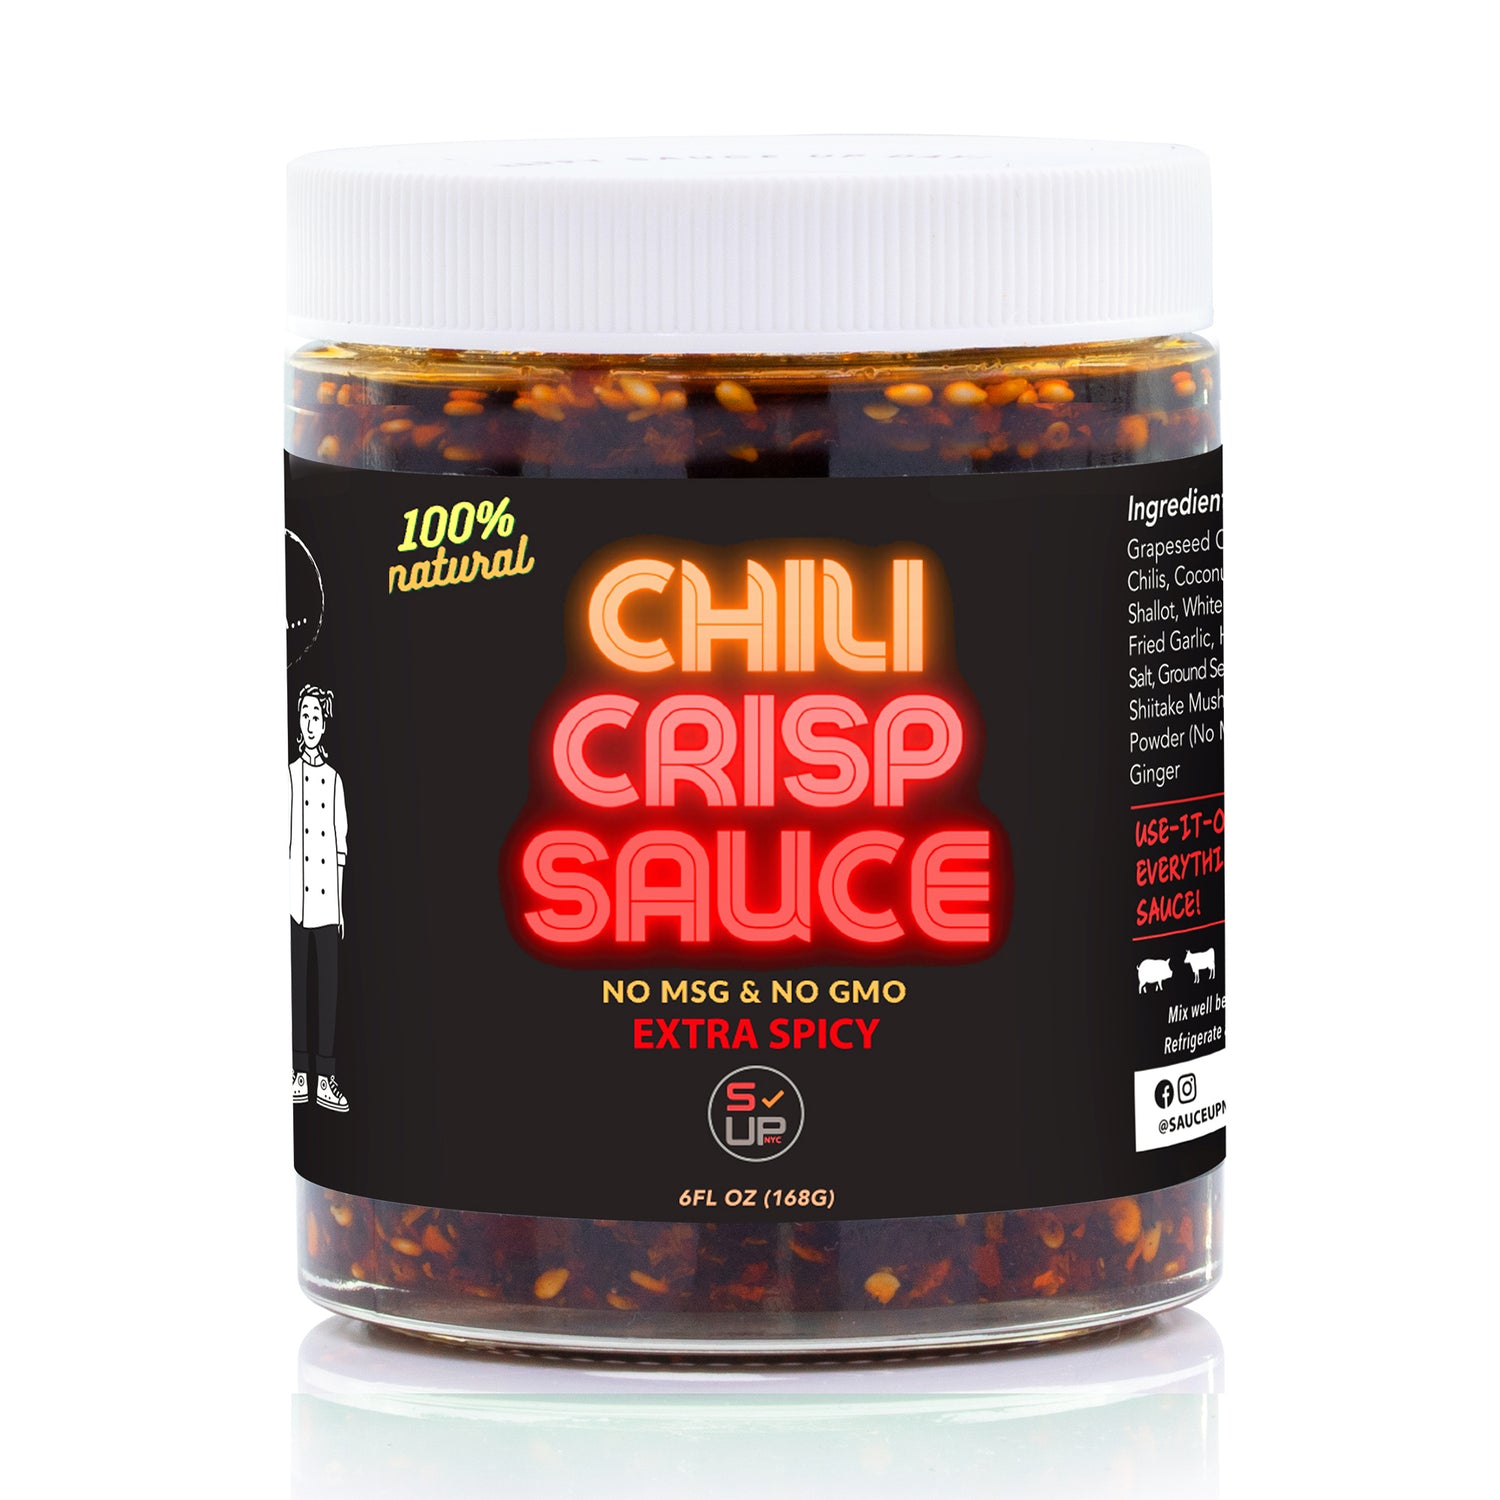 Chili Crisp Sauce